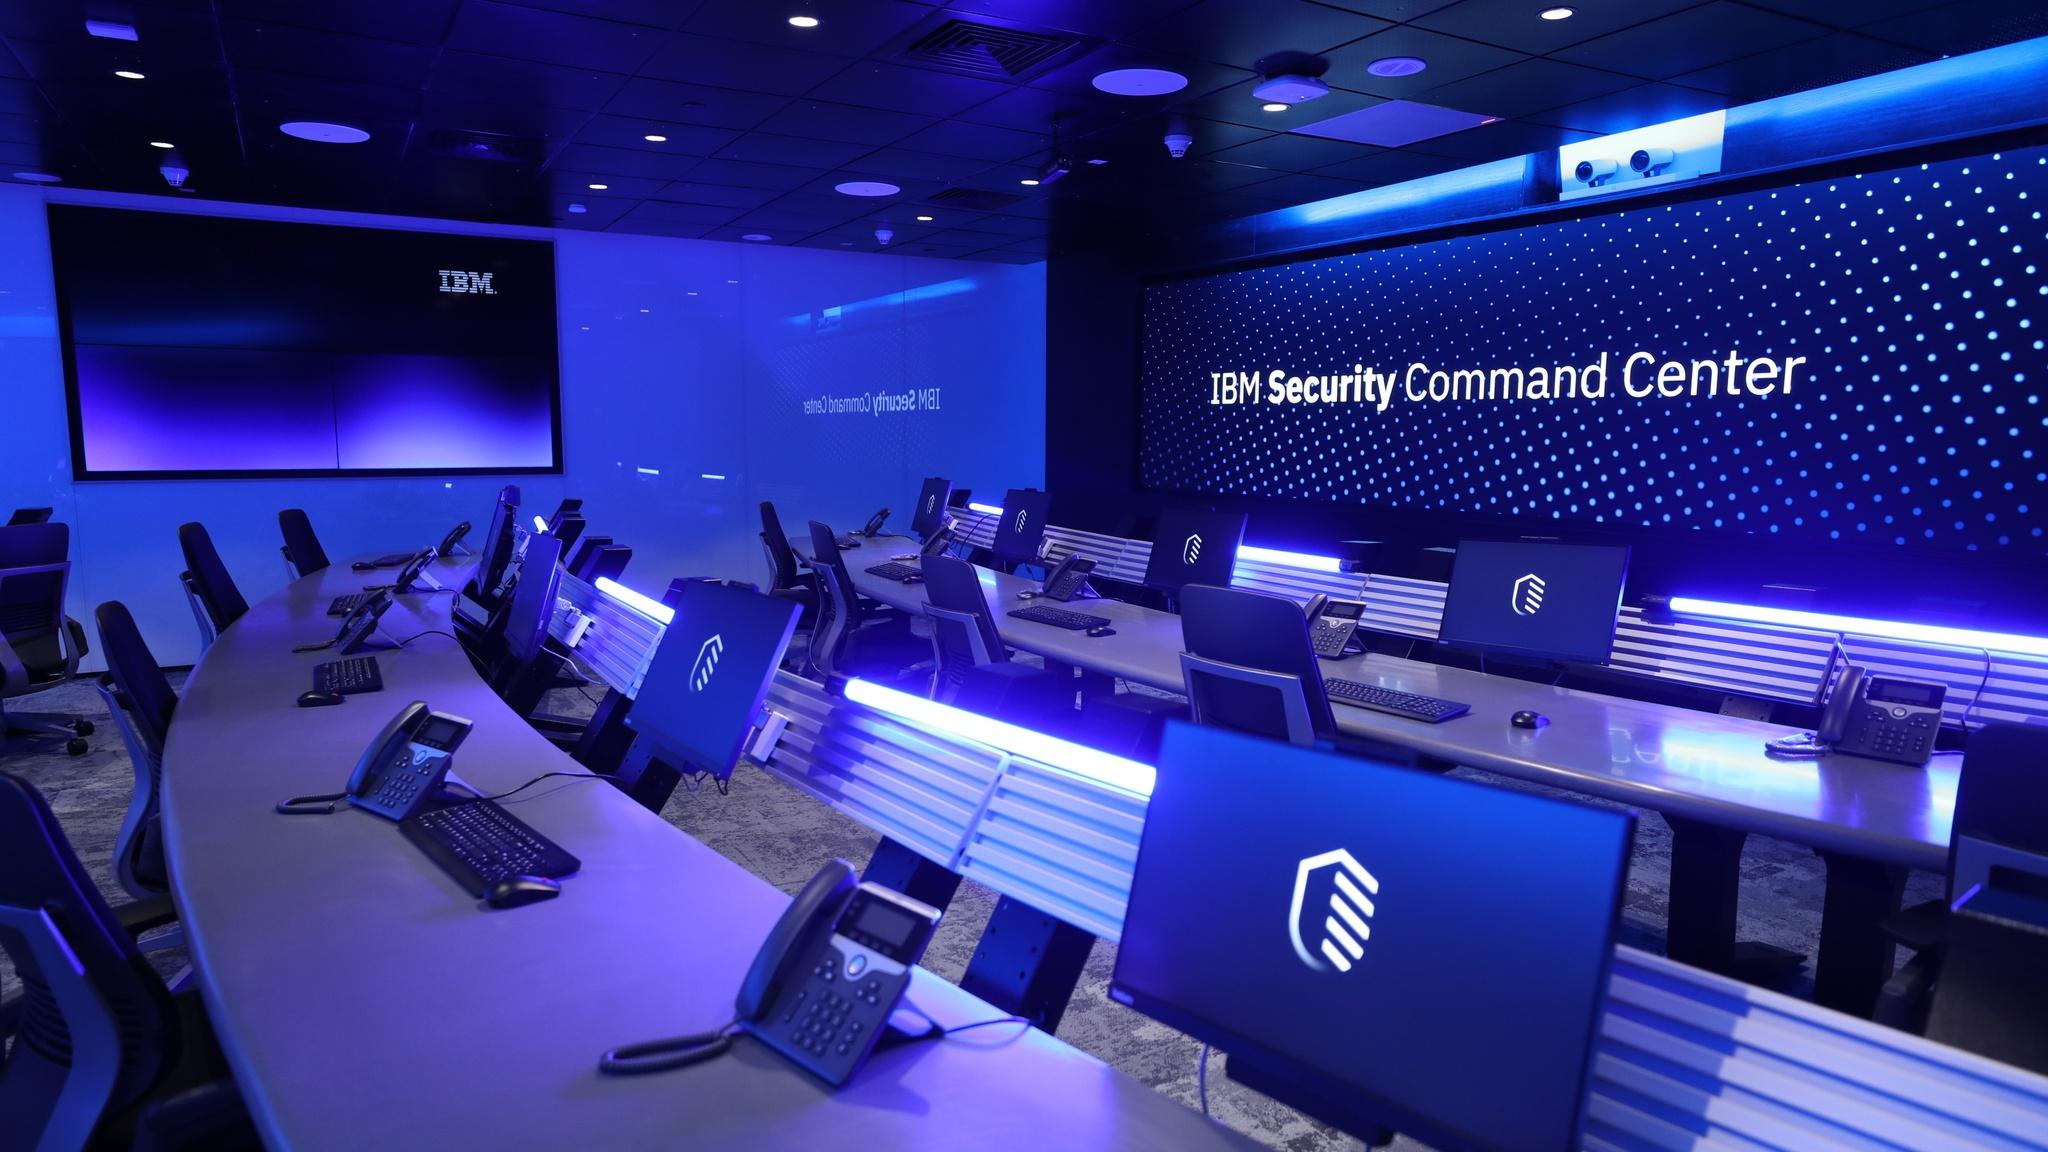 IBM unveiled new Cybersecurity Hub in Bengaluru to address cyberattack_50.1